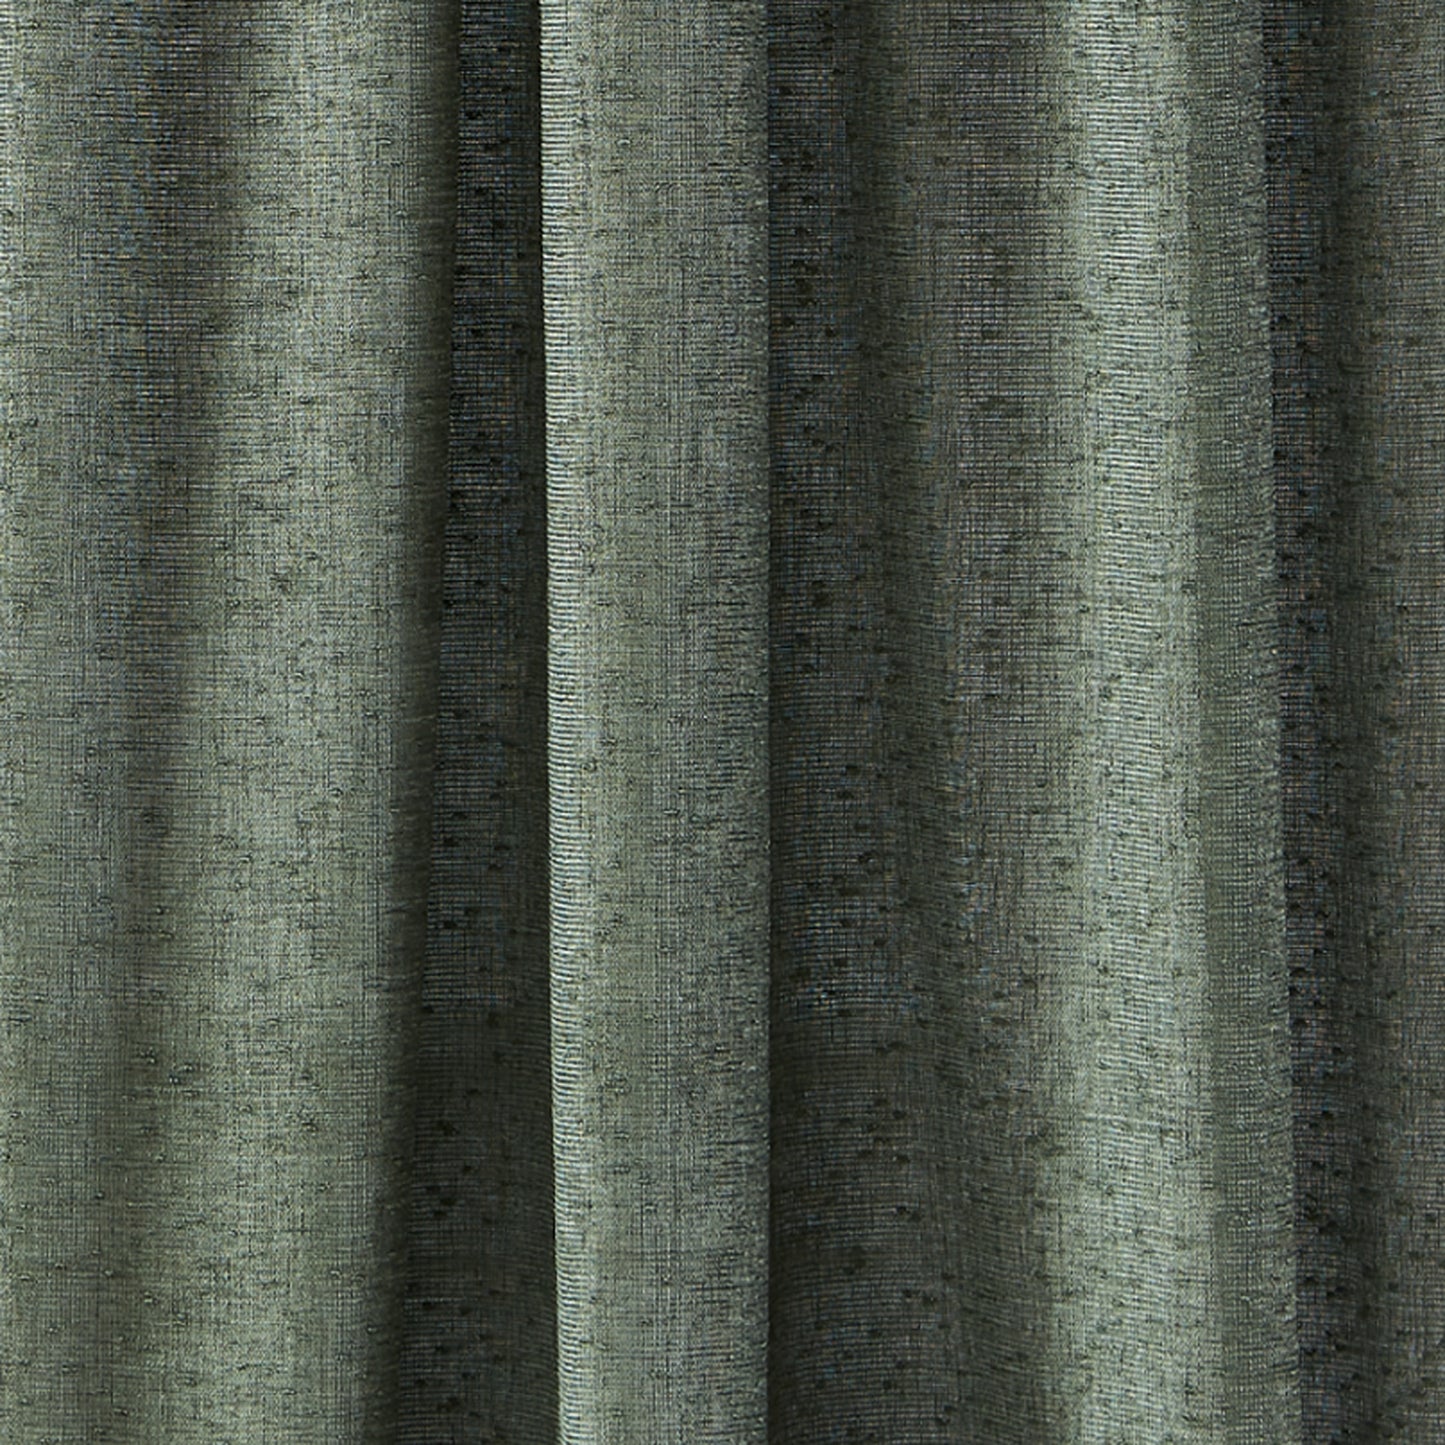 DKNY Boucle Chenille Curtain Panel Pair